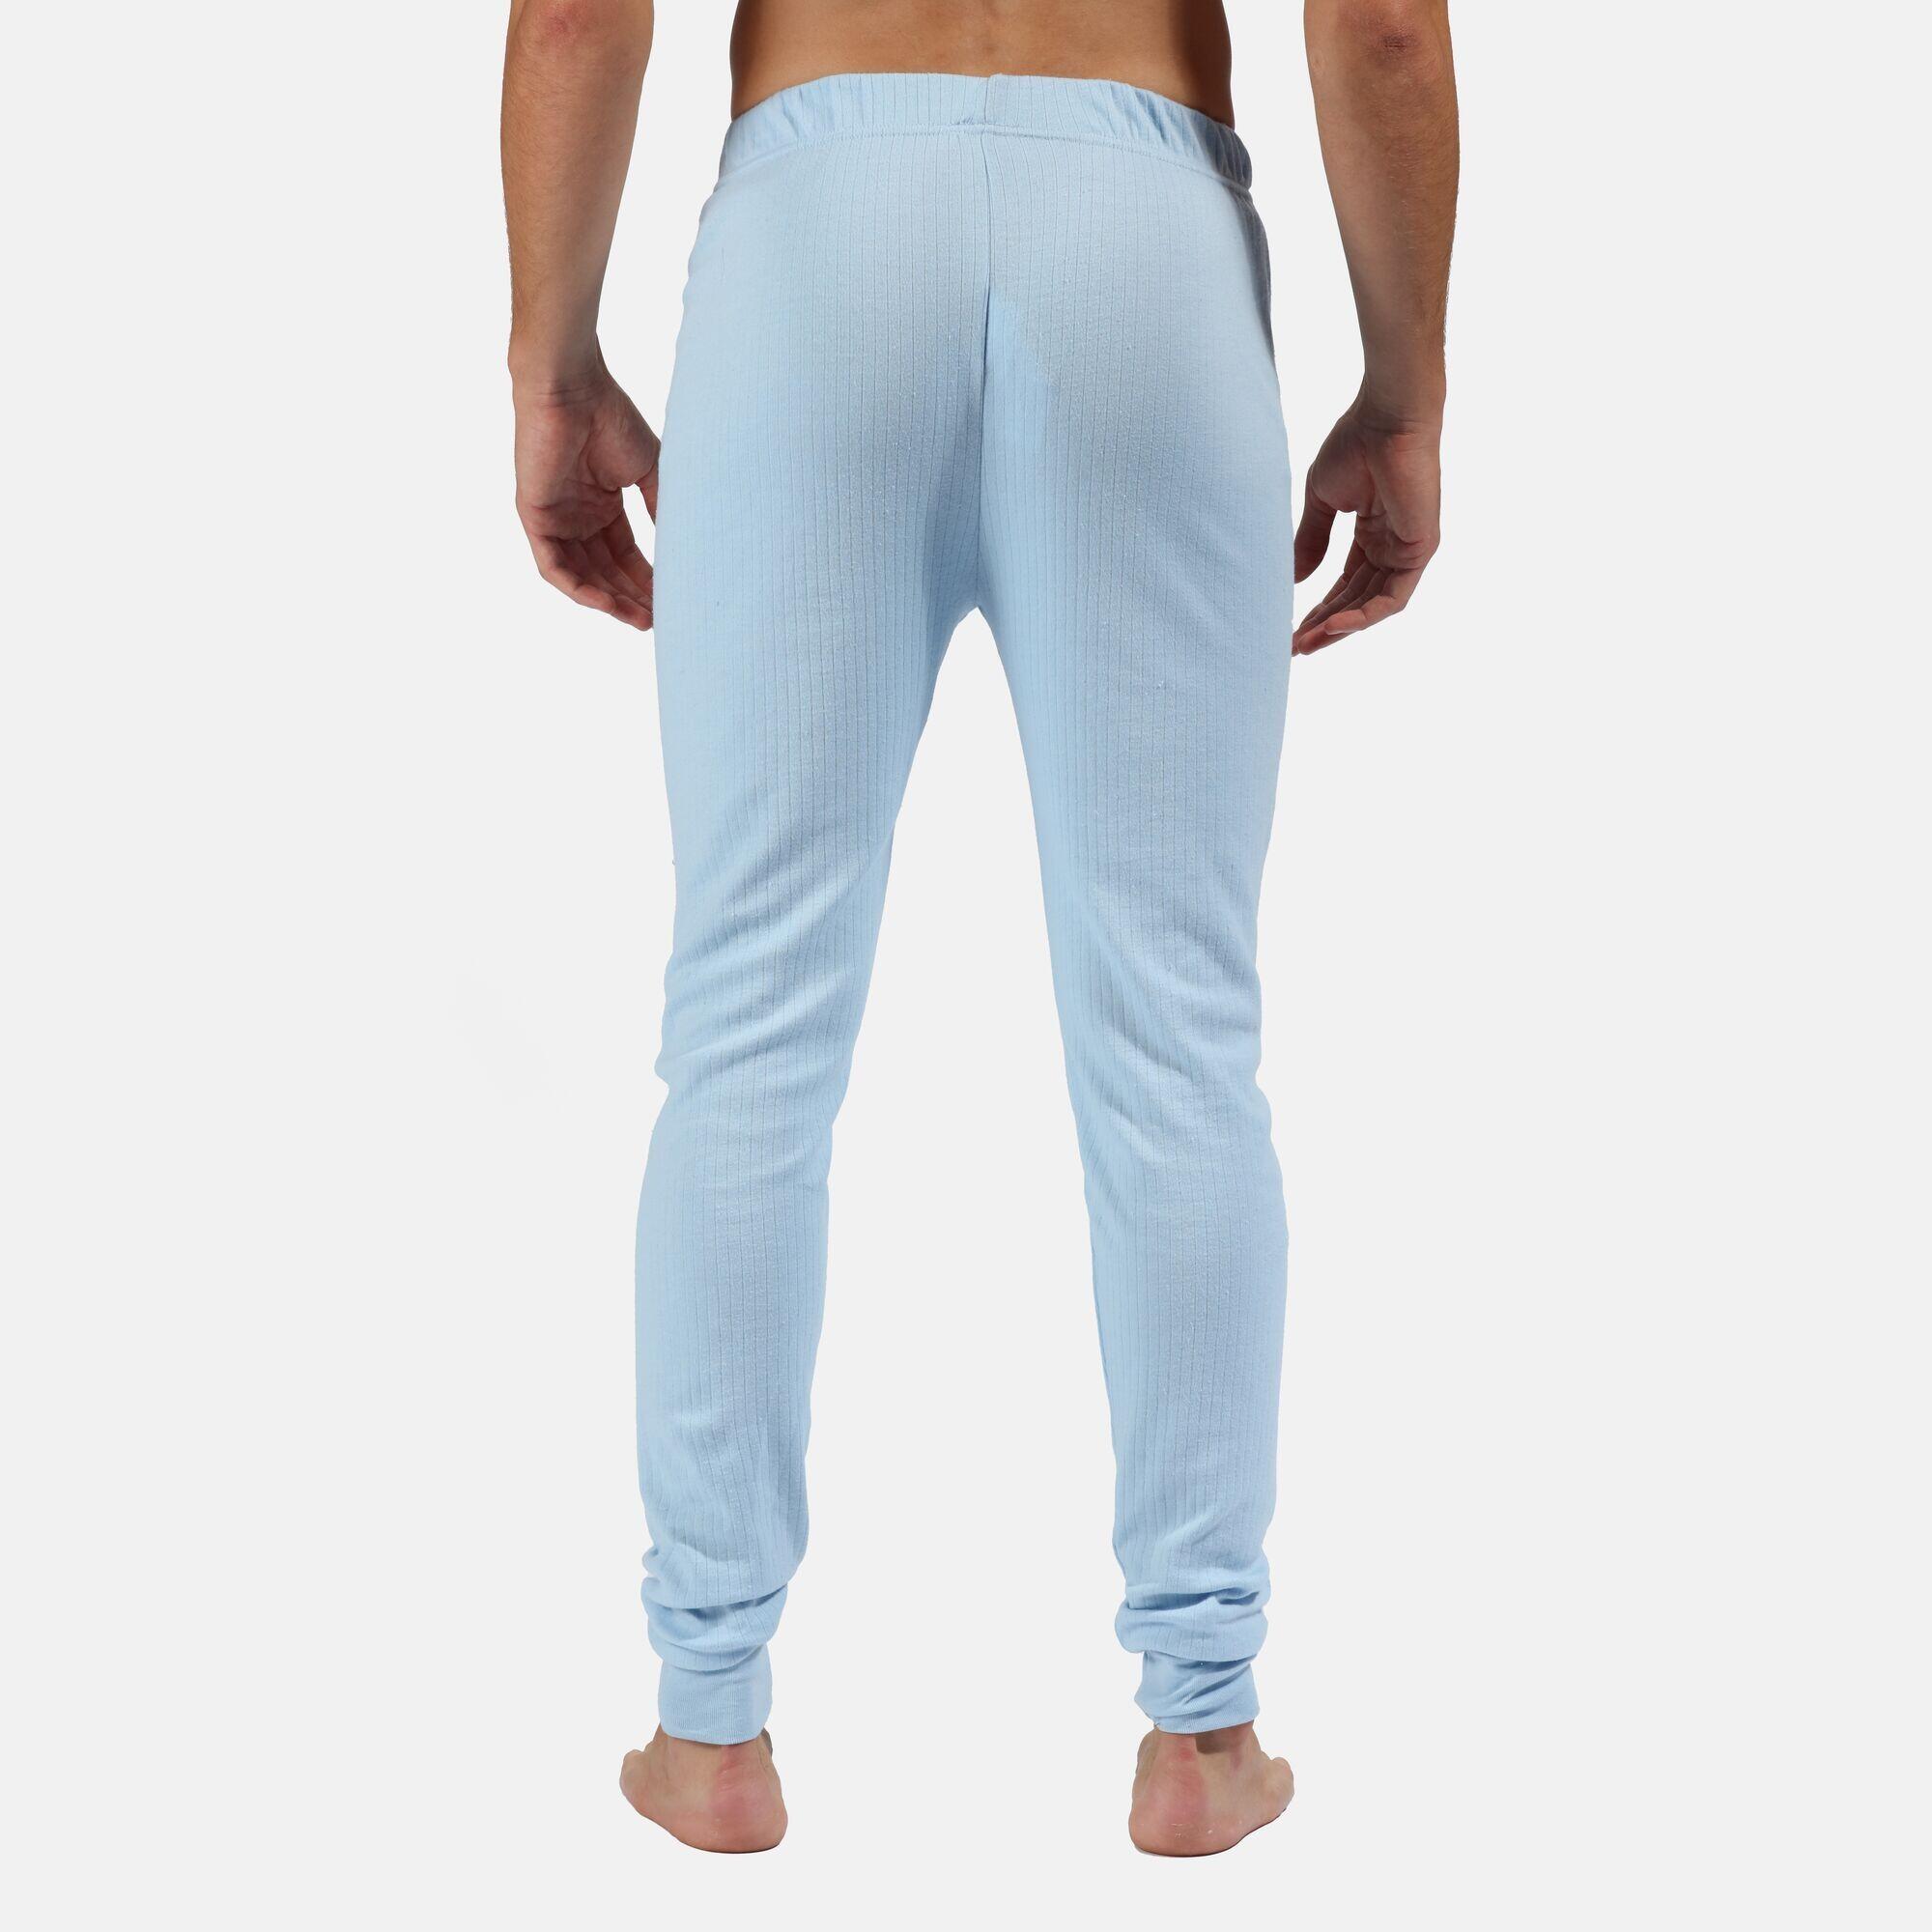 Mens Thermal Underwear Long Johns (Blue) 4/5